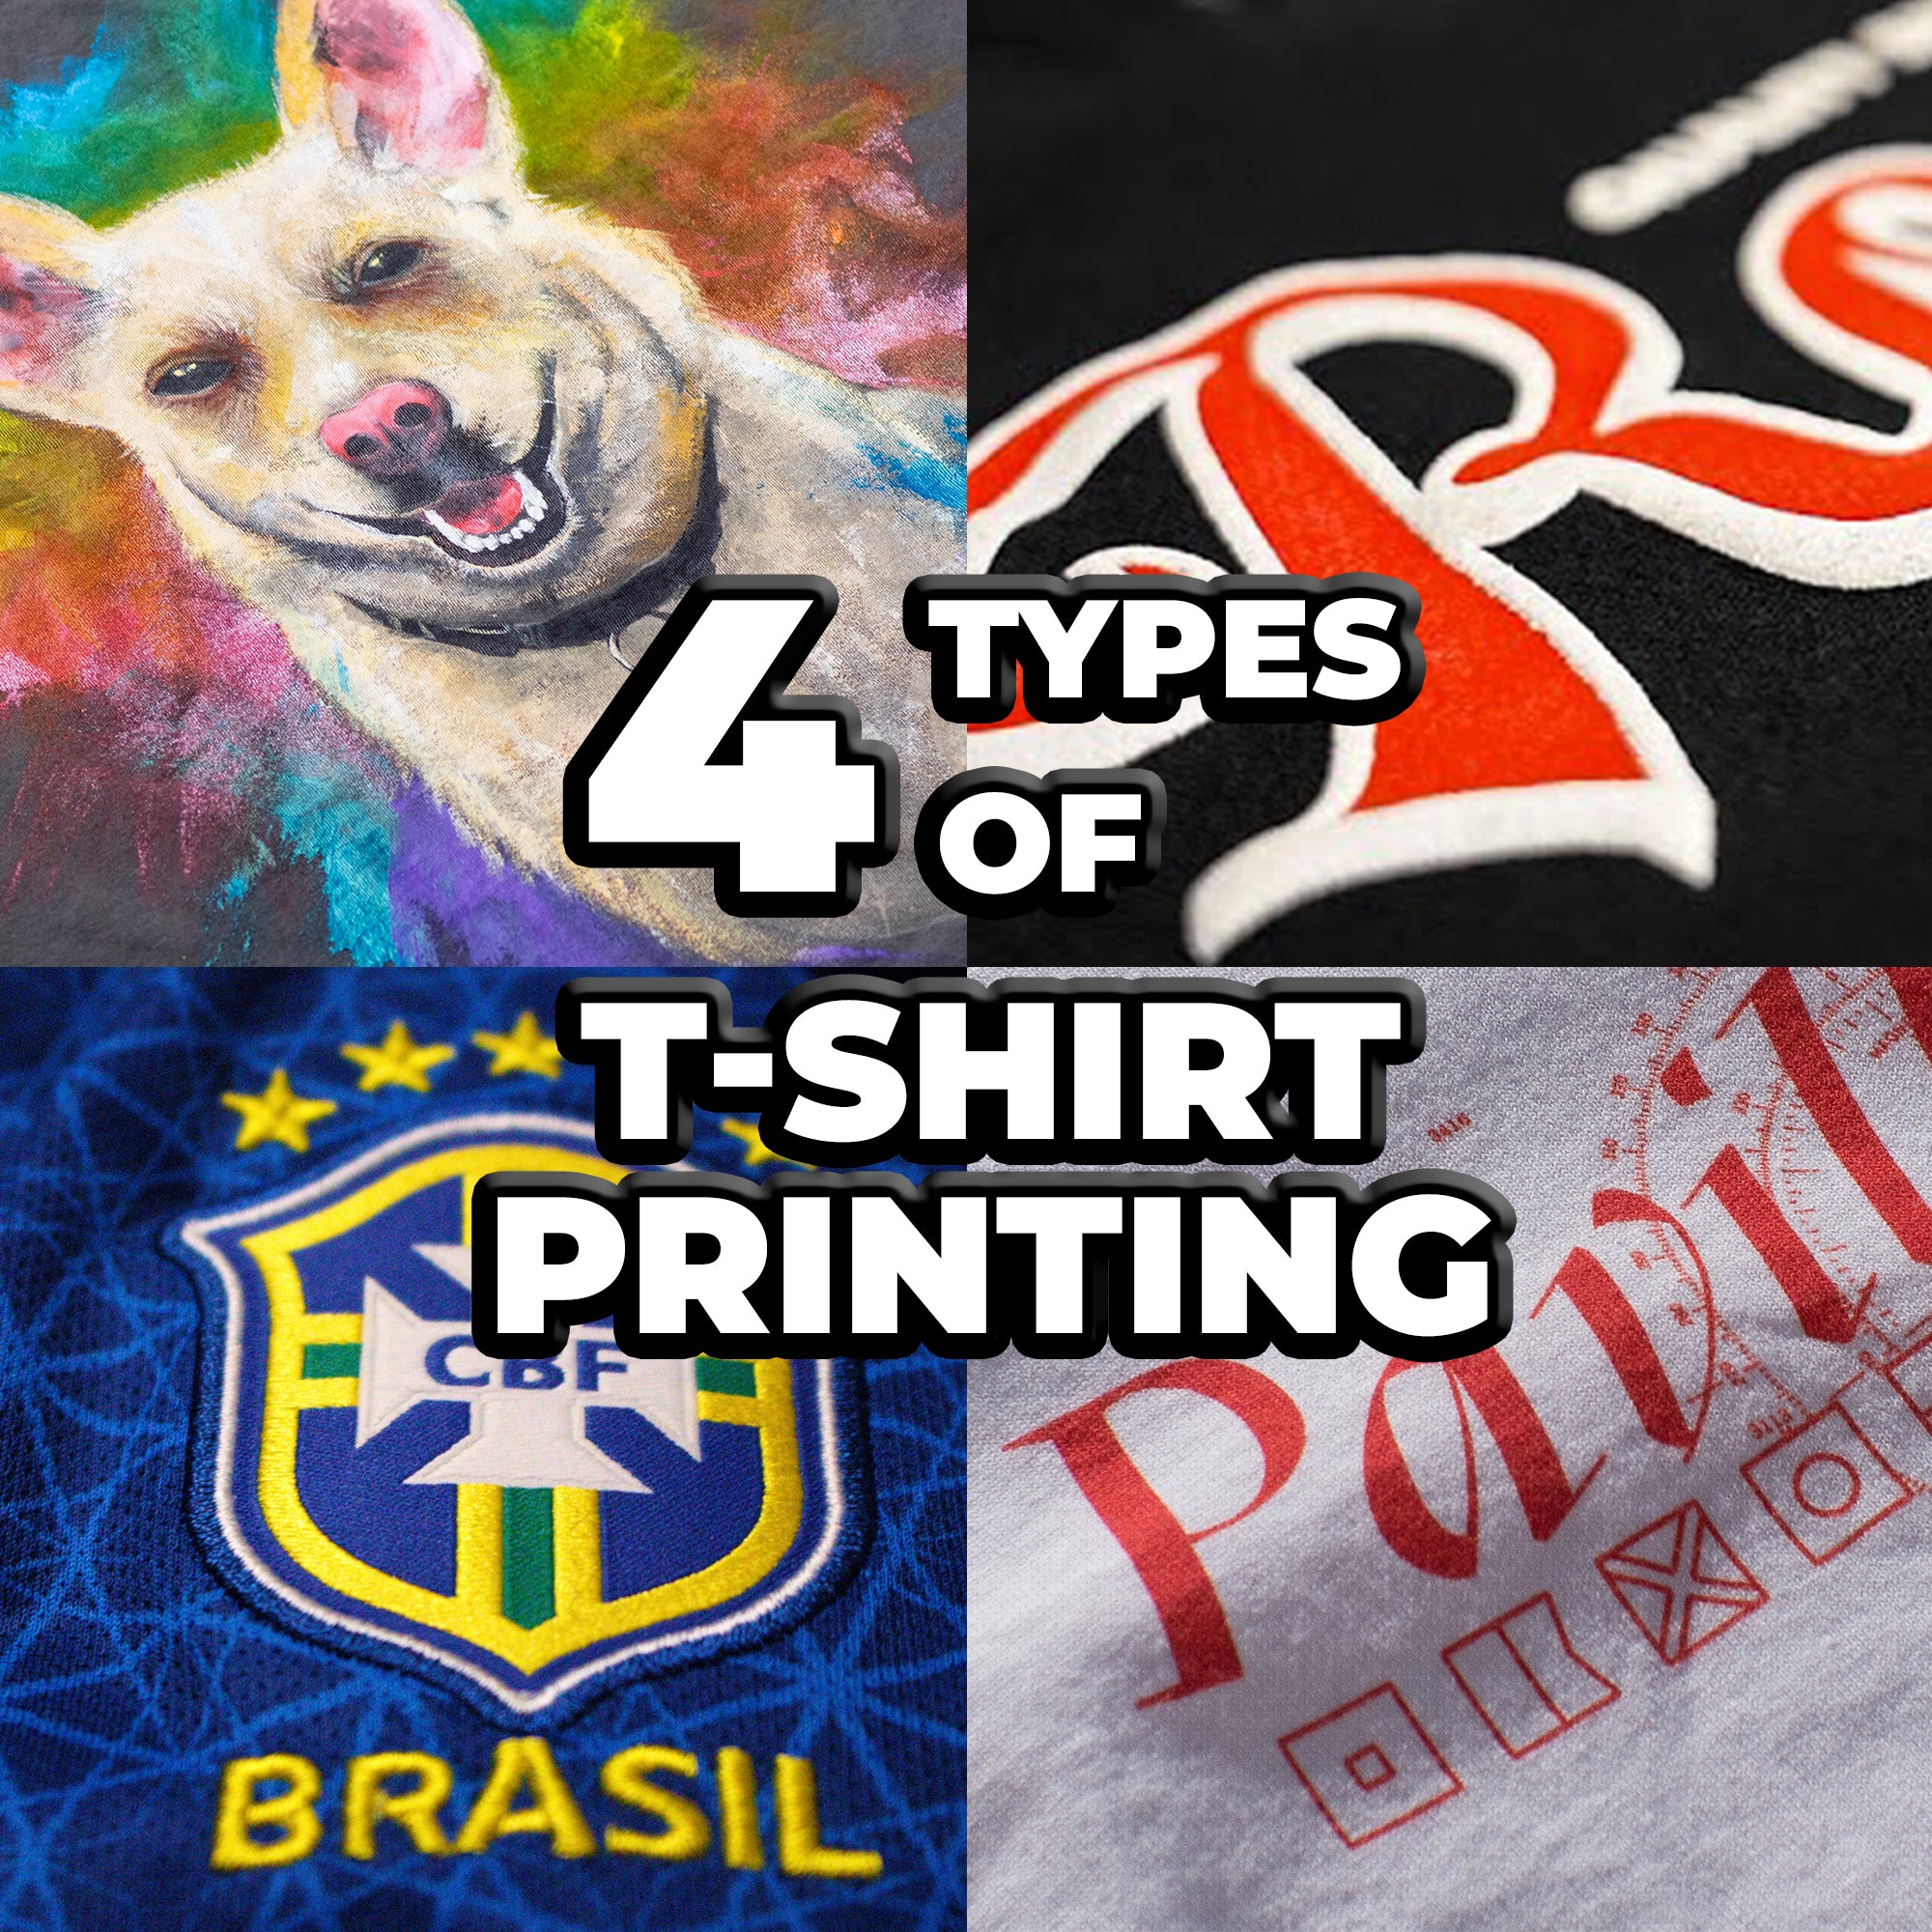 San Diego T-shirt Printing